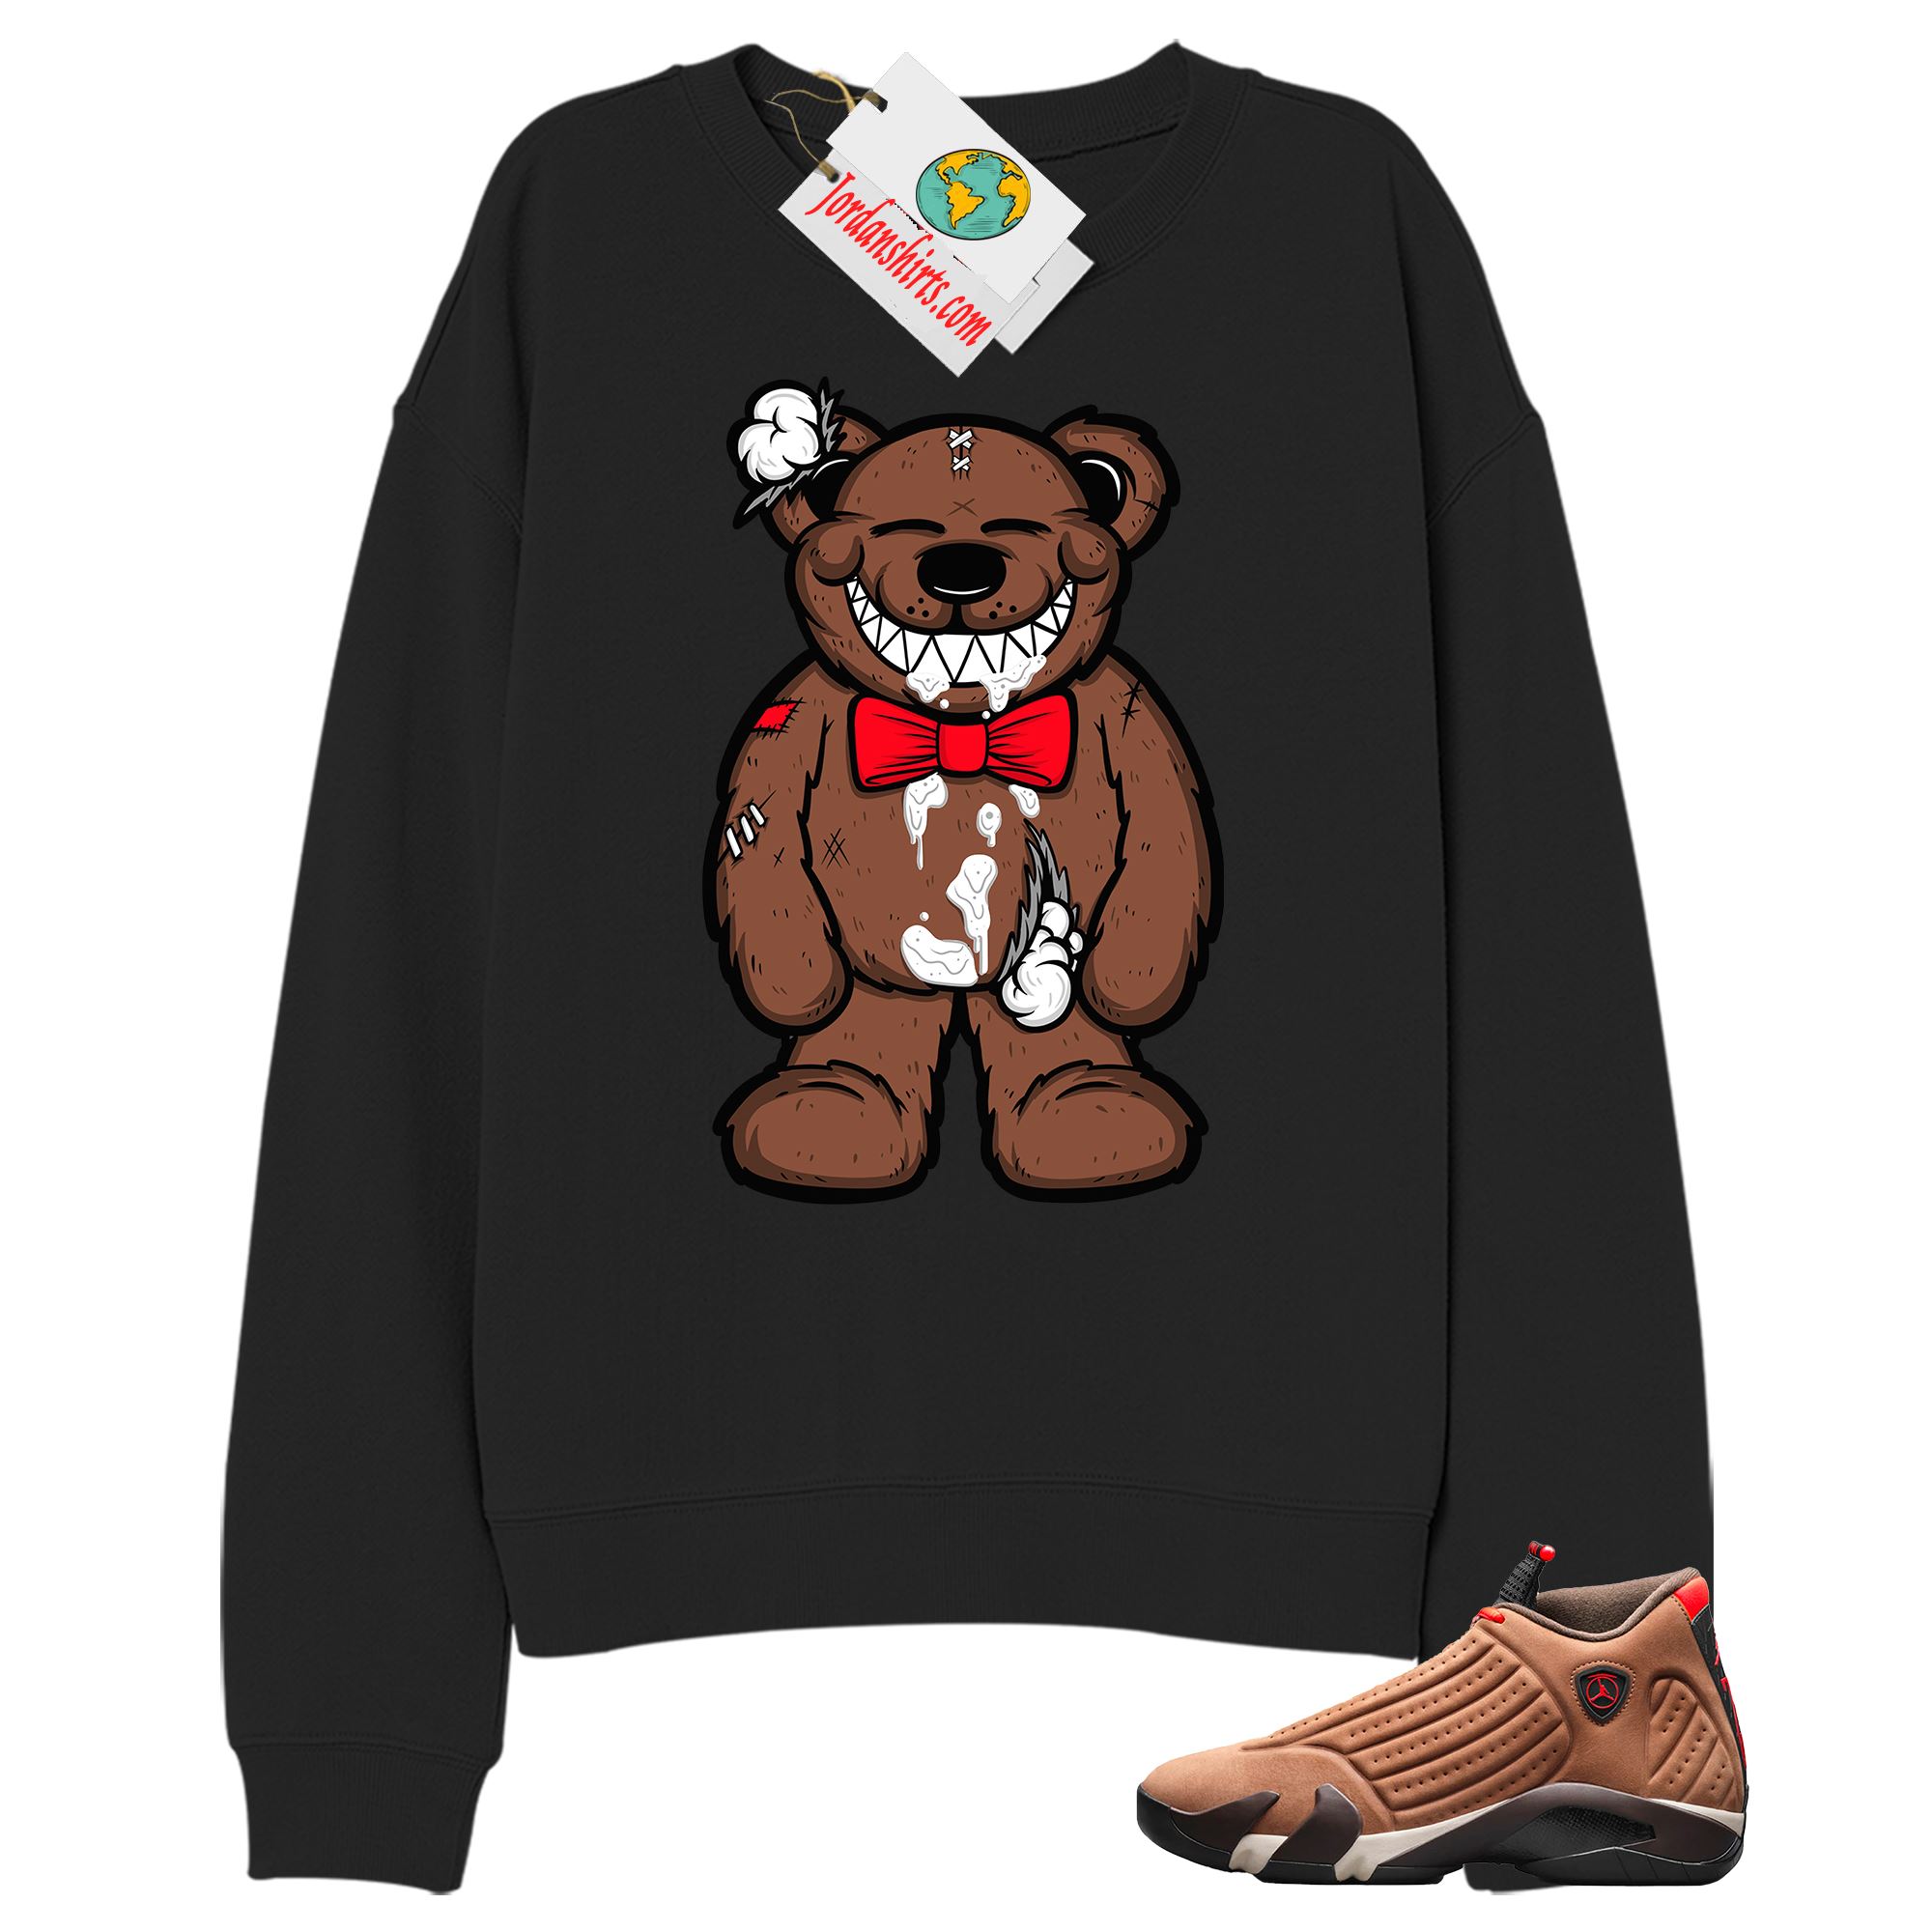 Jordan 14 Sweatshirt, Teddy Bear Smile Black Sweatshirt Air Jordan 14 Winterized 14s Plus Size Up To 5xl